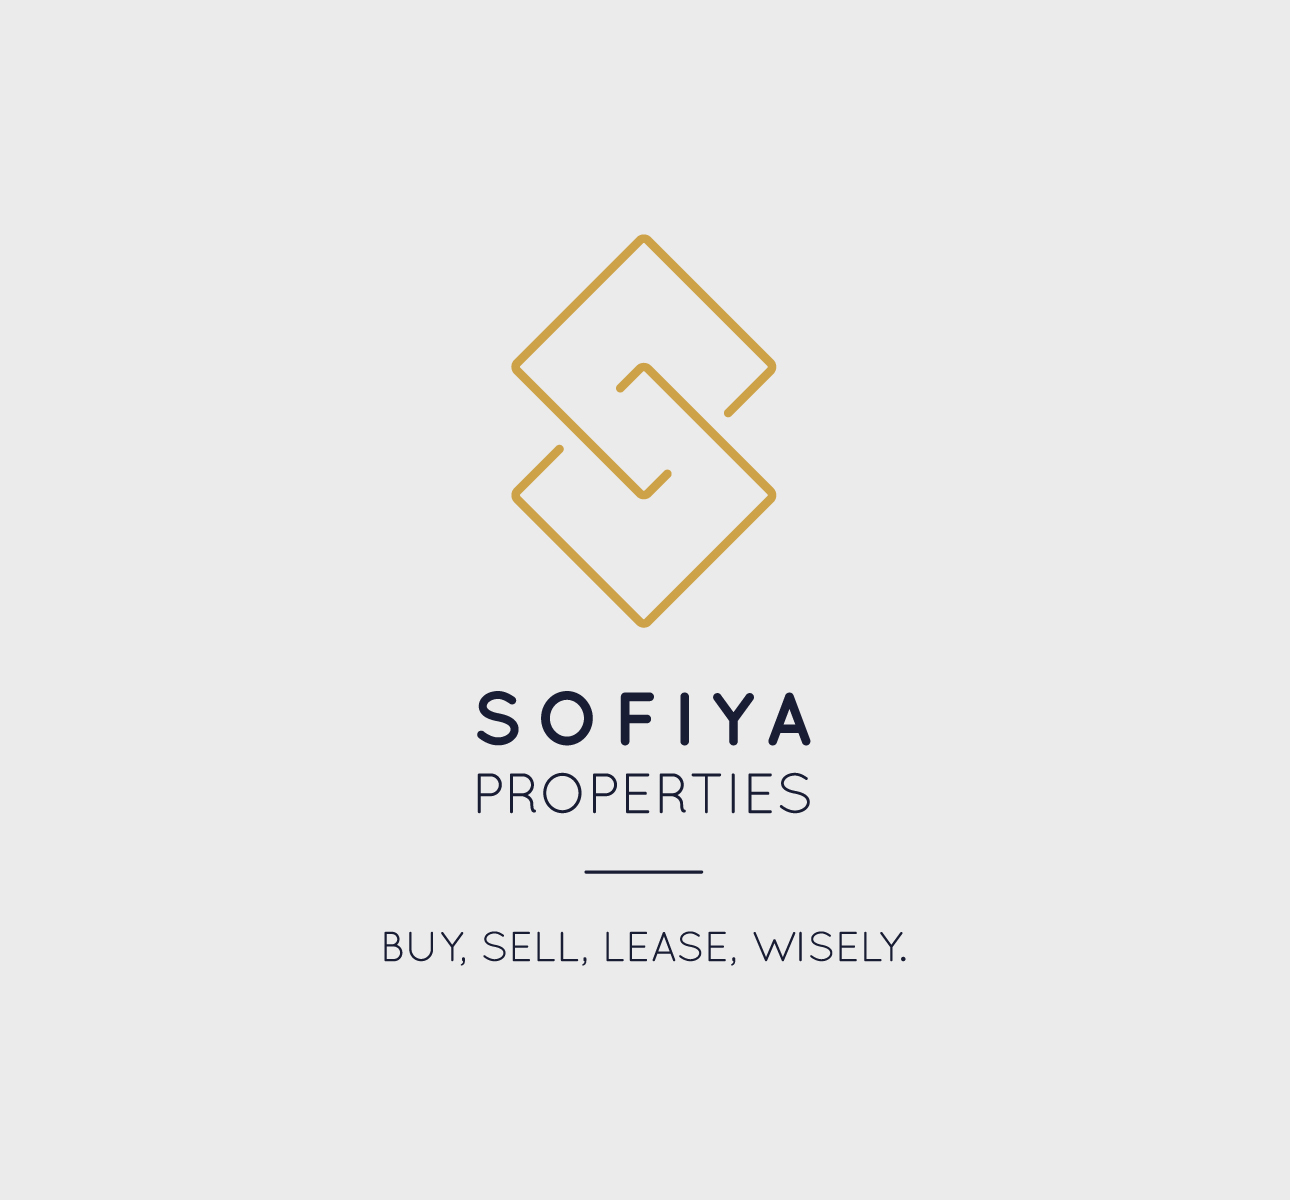 Sofiya Properties